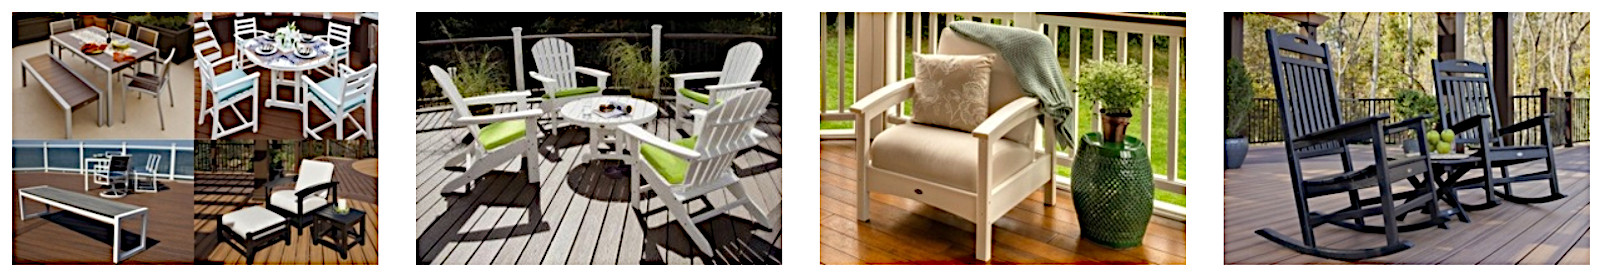 Trex outdoor furniture discount rate